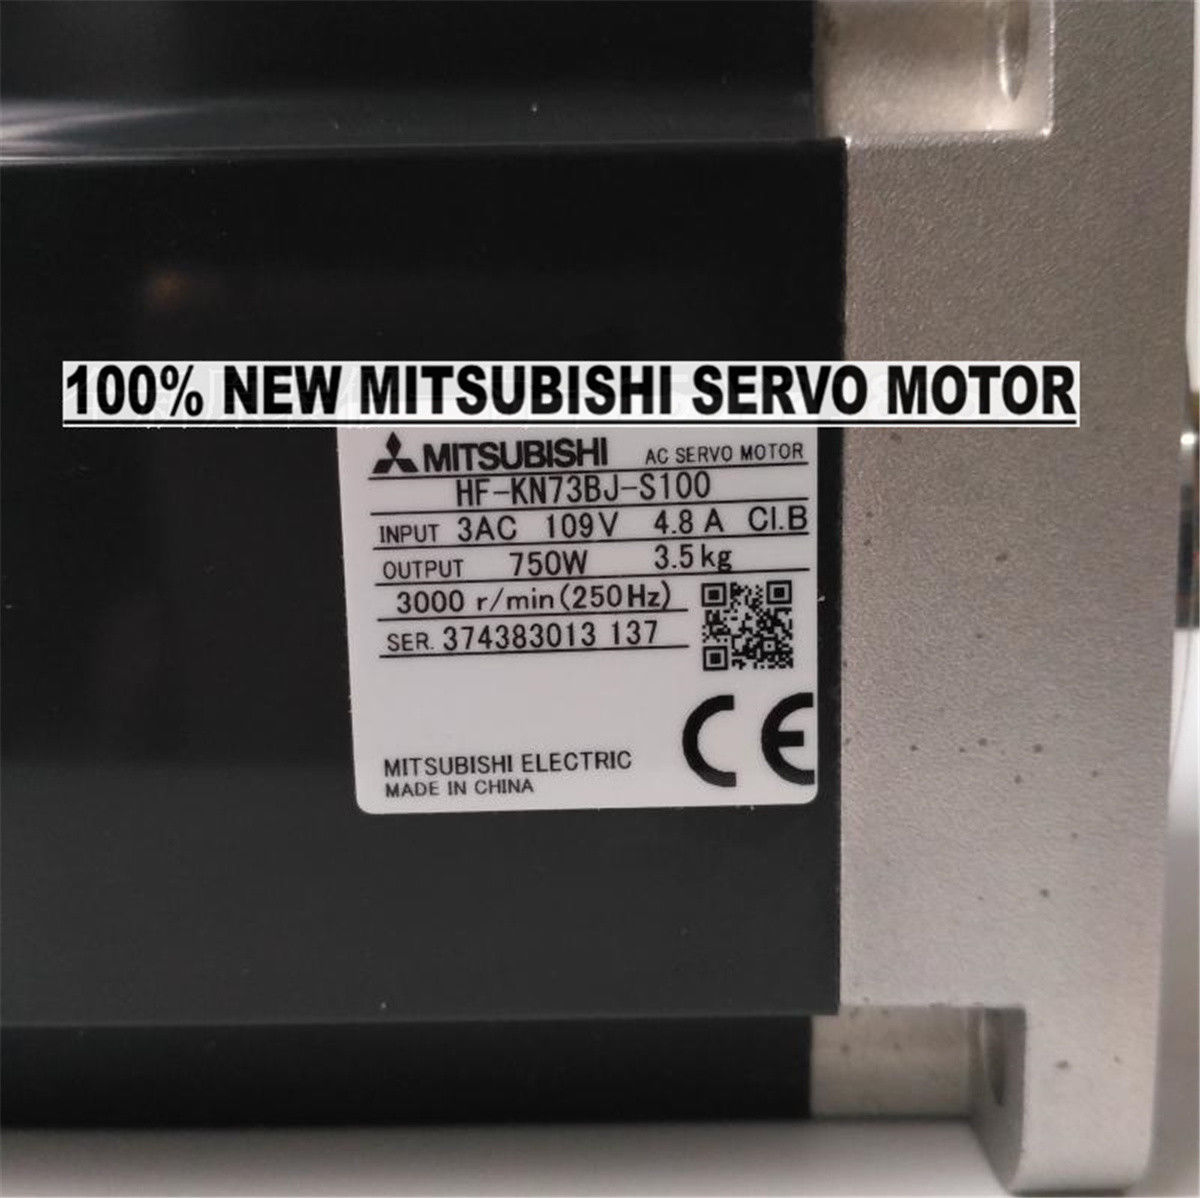 NEW Mitsubishi Servo Motor HF-KN73BJ-S100 in box HFKN73BJS100 - zum Schließen ins Bild klicken